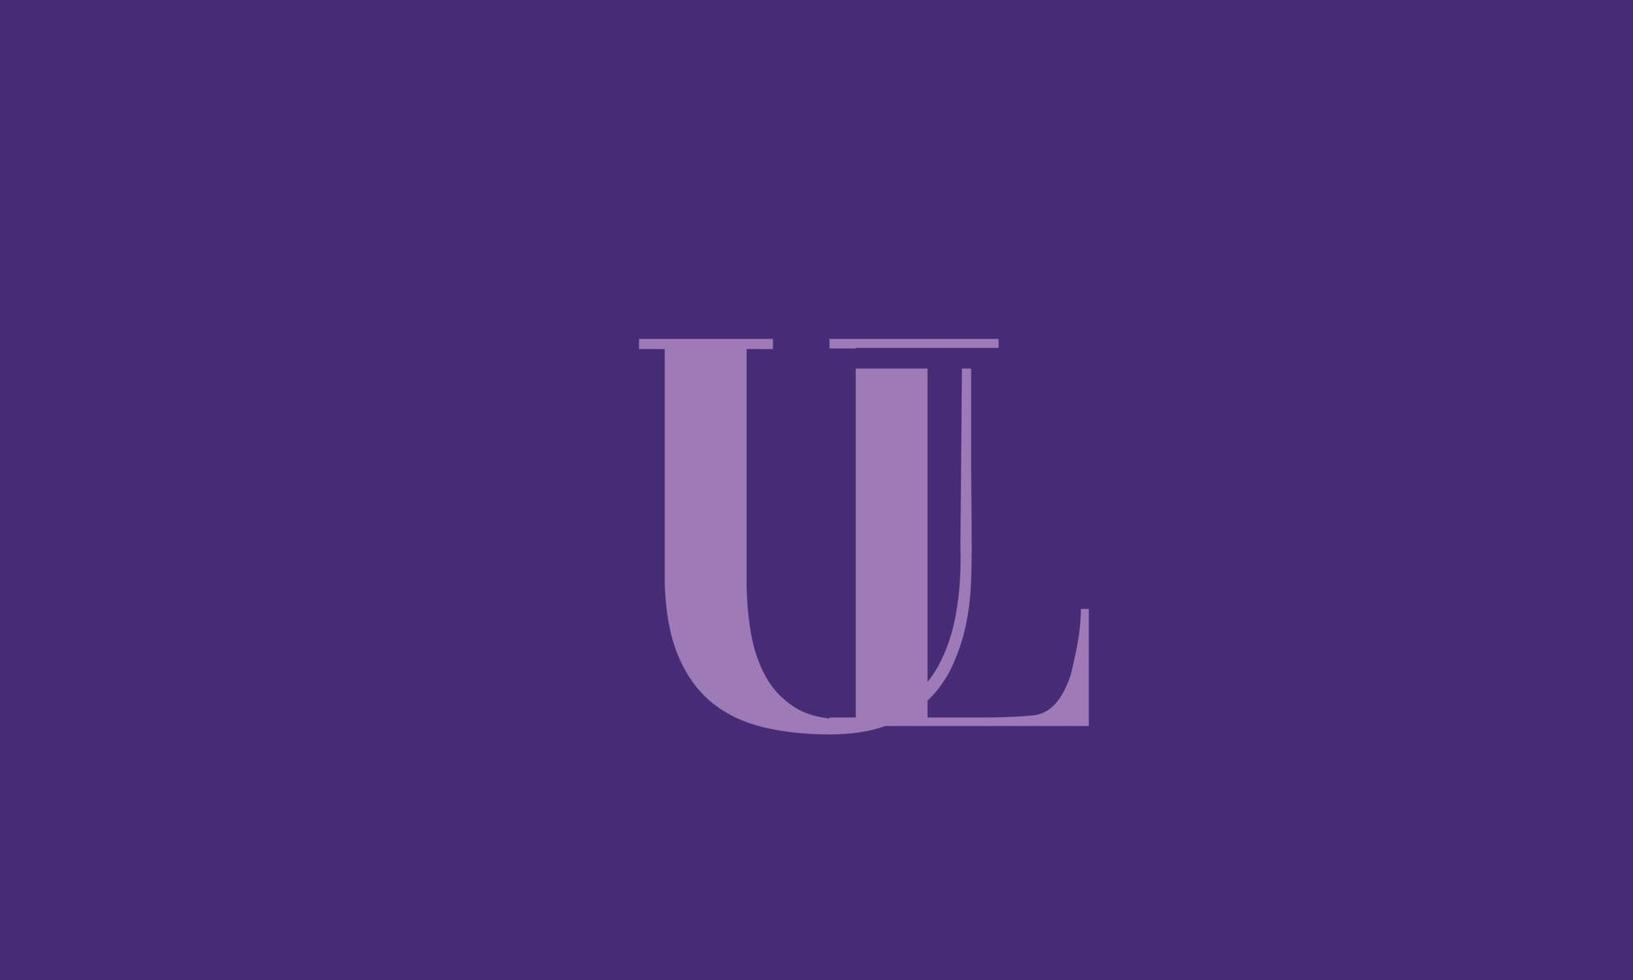 Alphabet letters Initials monogram logo UL, LU, U and L vector